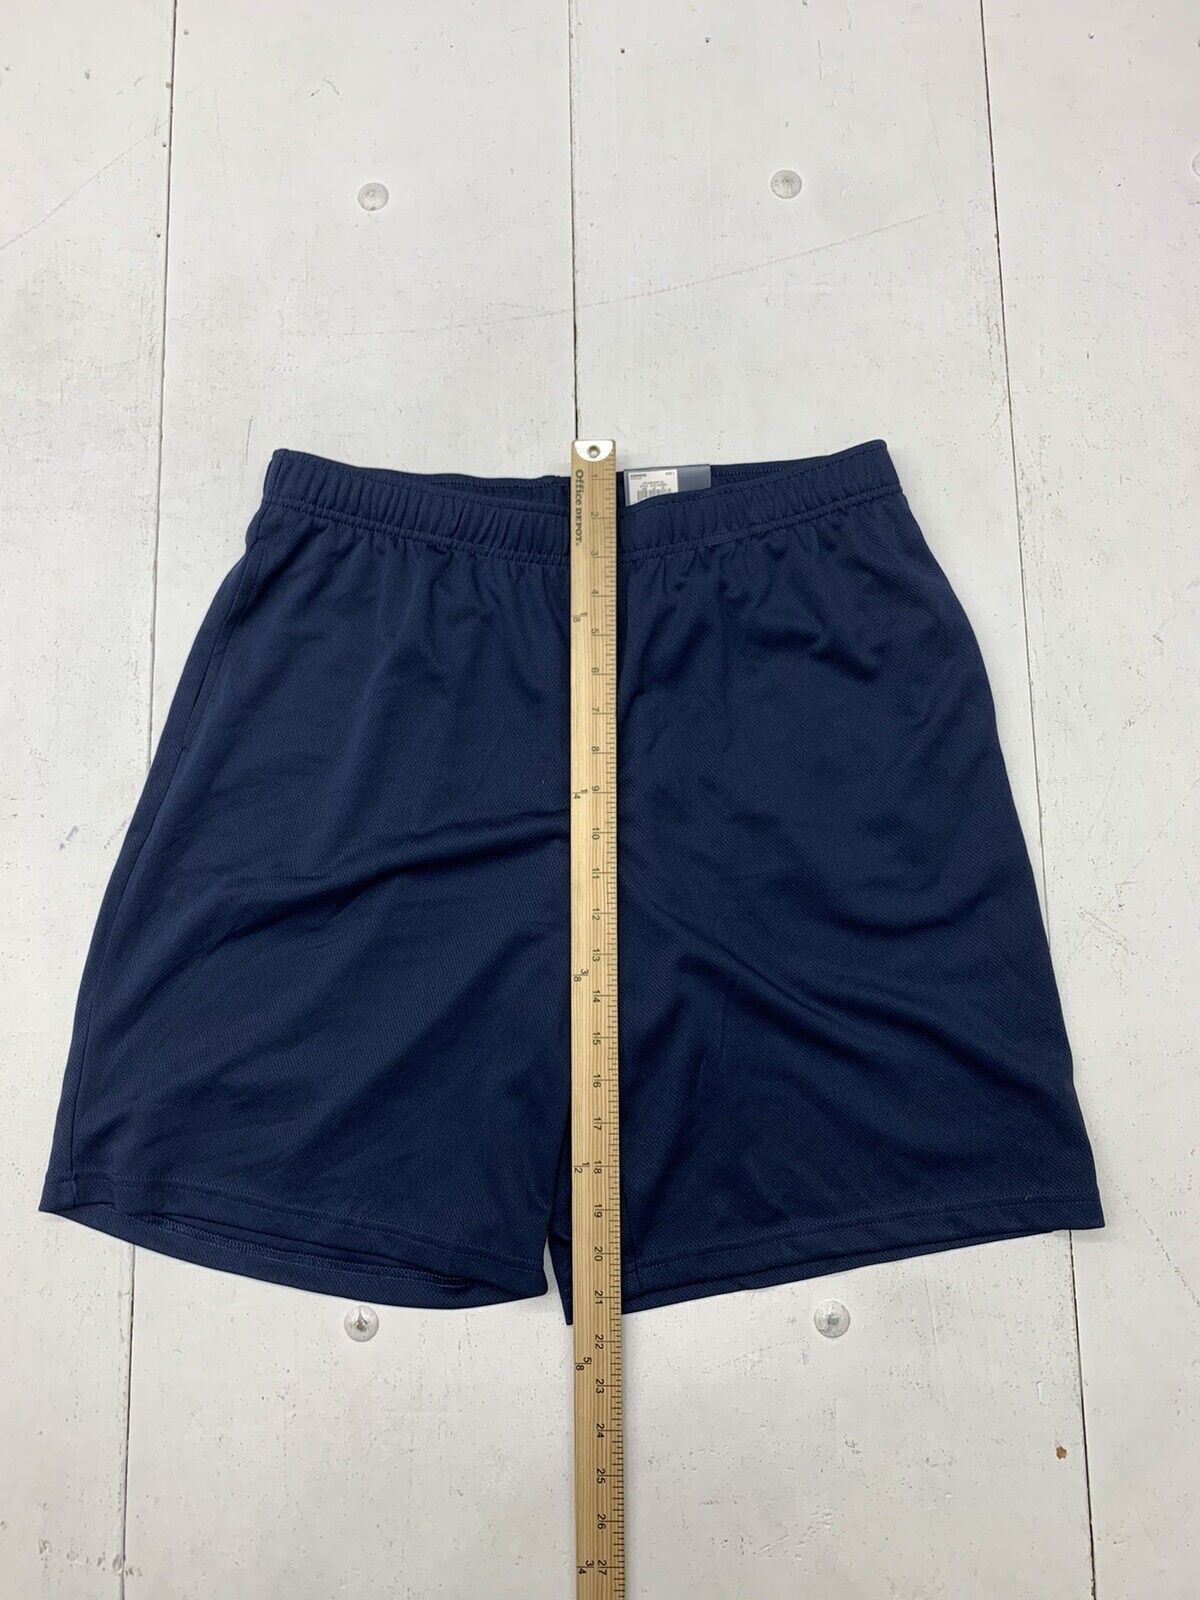 Mens Tek Gear Basketball Shorts - Bottoms, Clothing